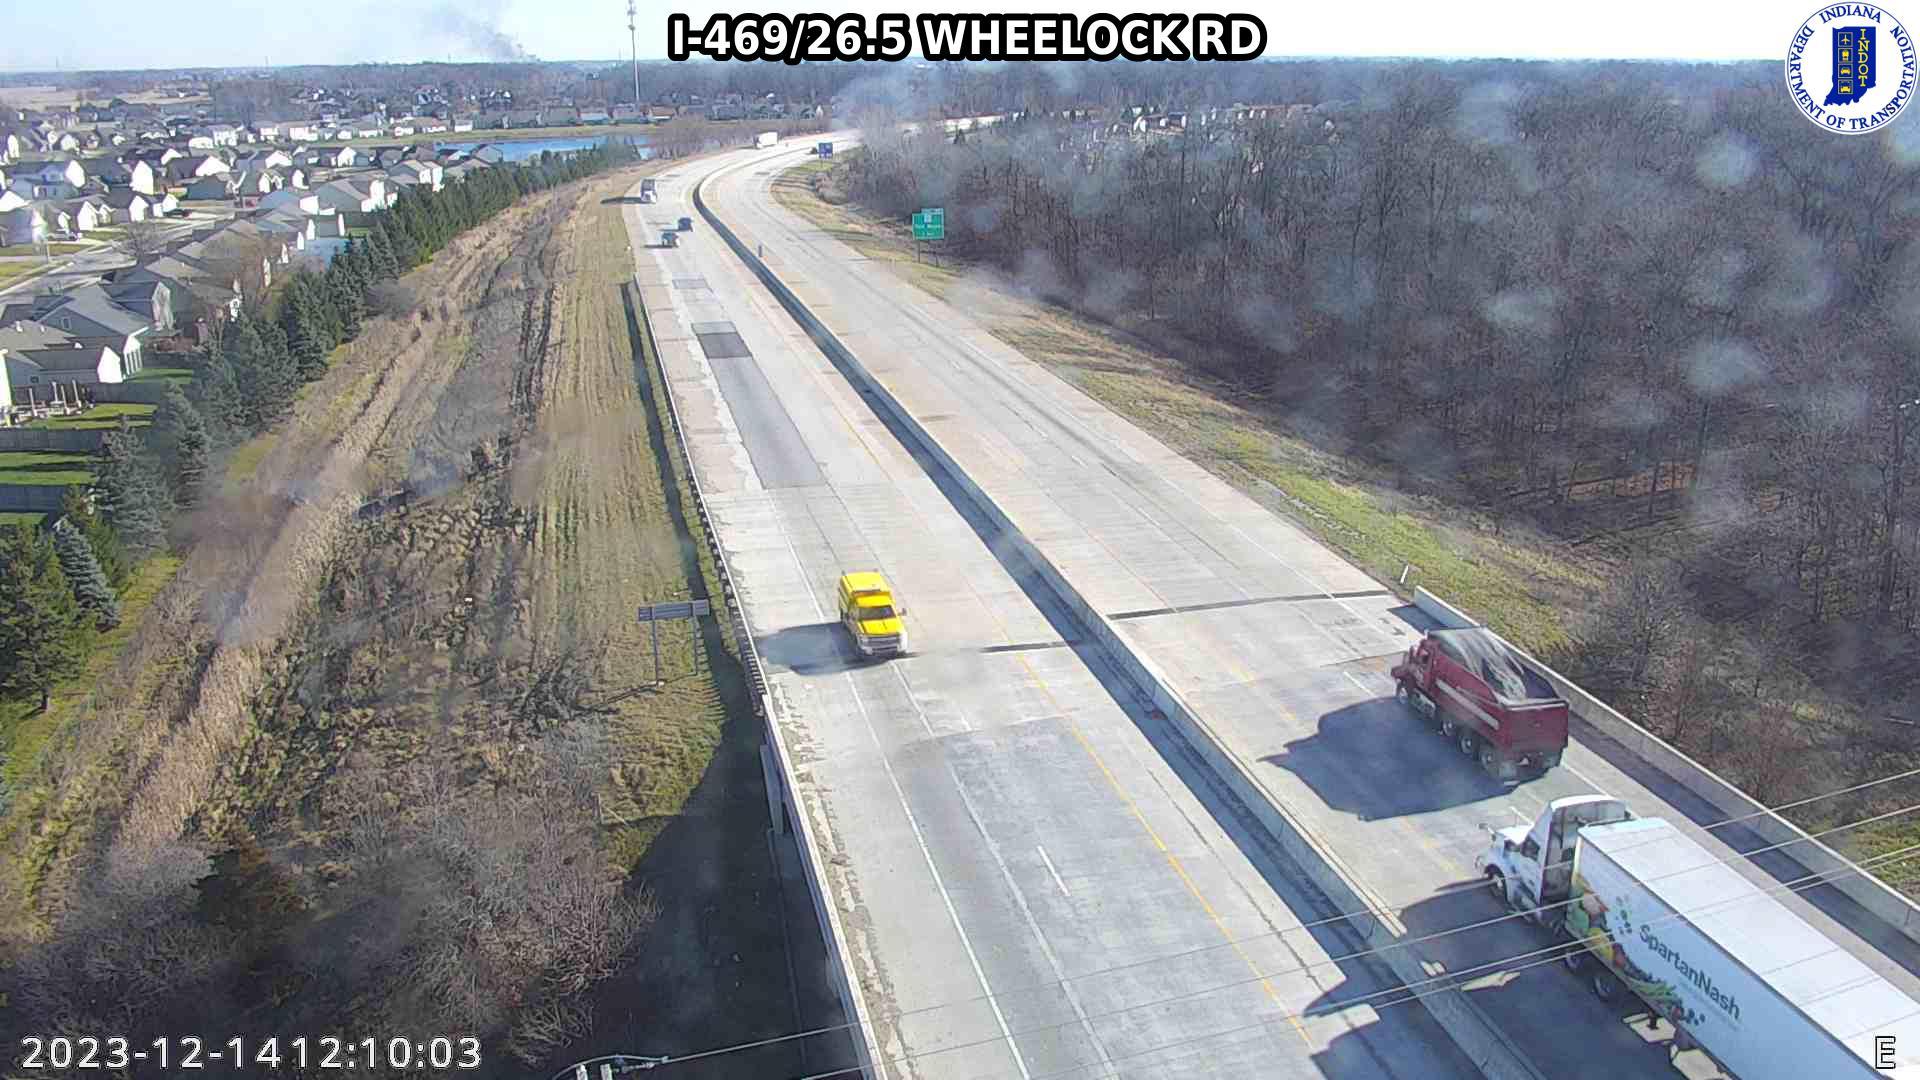 Traffic Cam Thurman: I-469: I-469/26.5 WHEELOCK RD Player